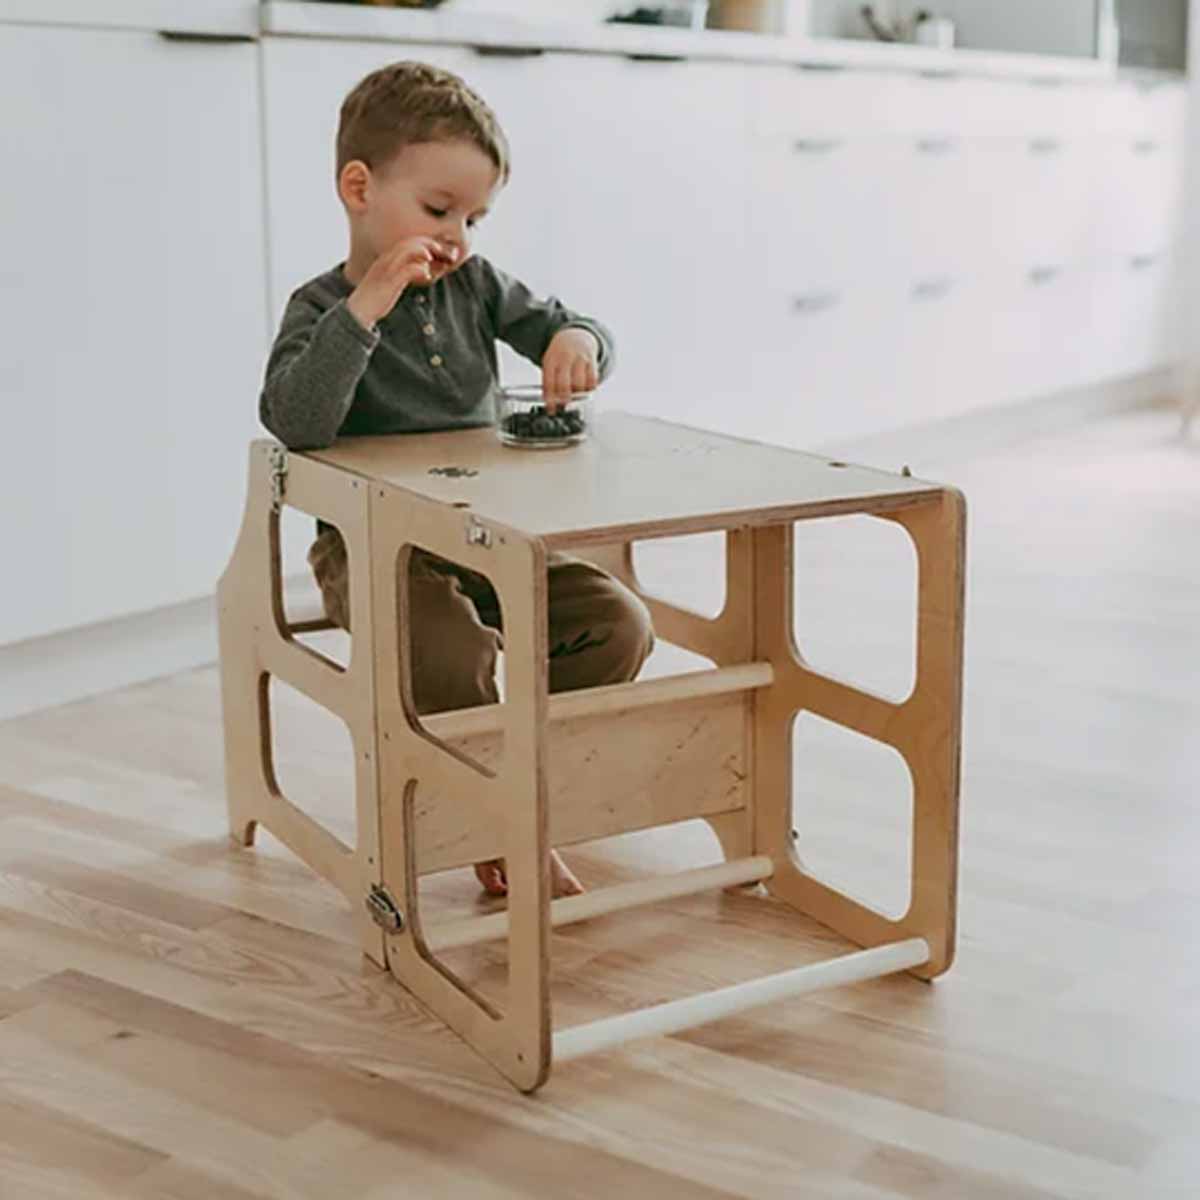 Crea tu propia mesa de niños con inspiración Montessori